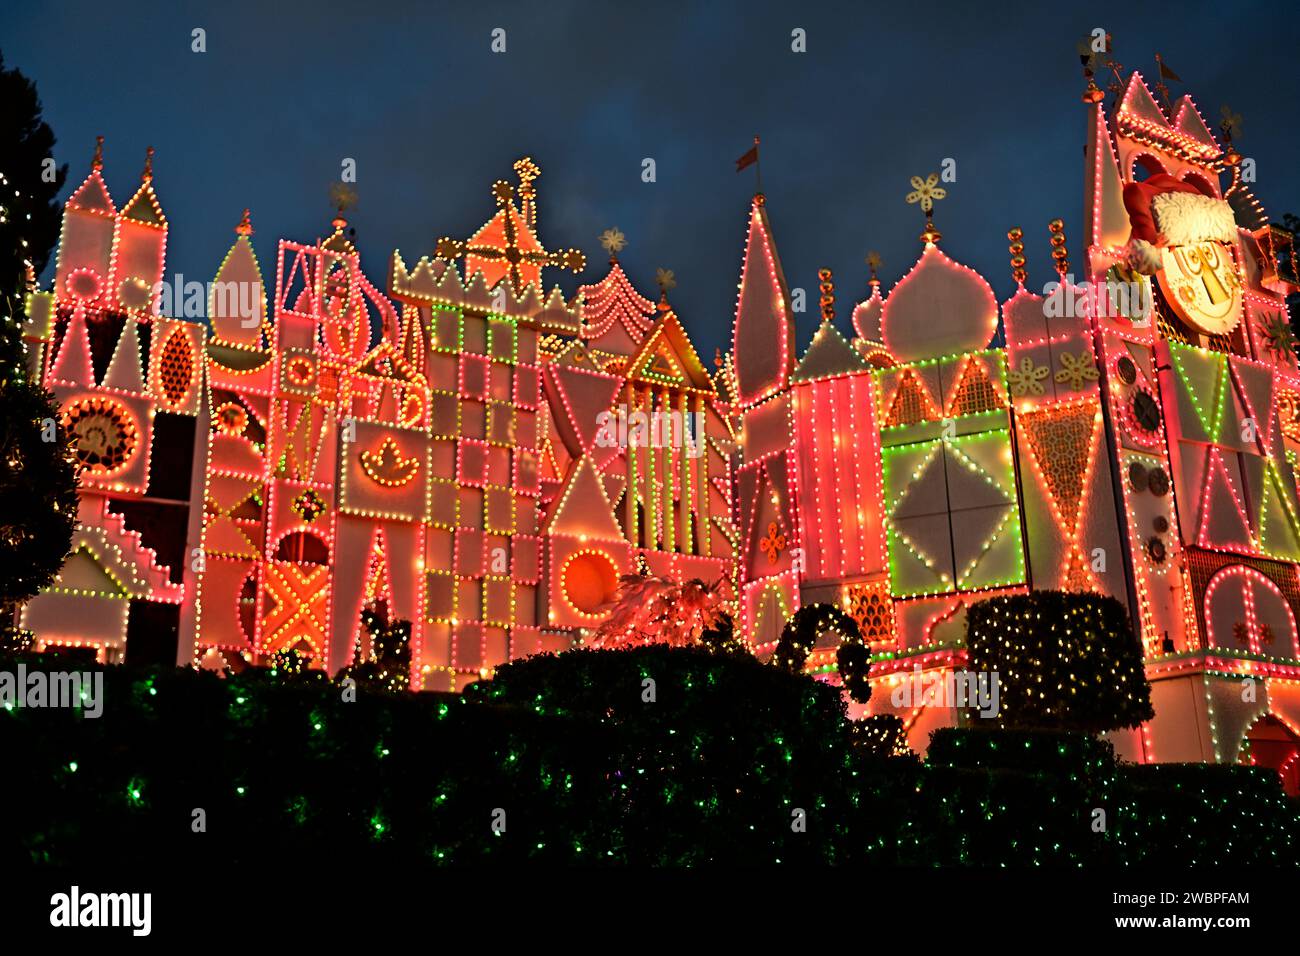 Disneyland - It's a Small World Christmas Lighting Stock Photo